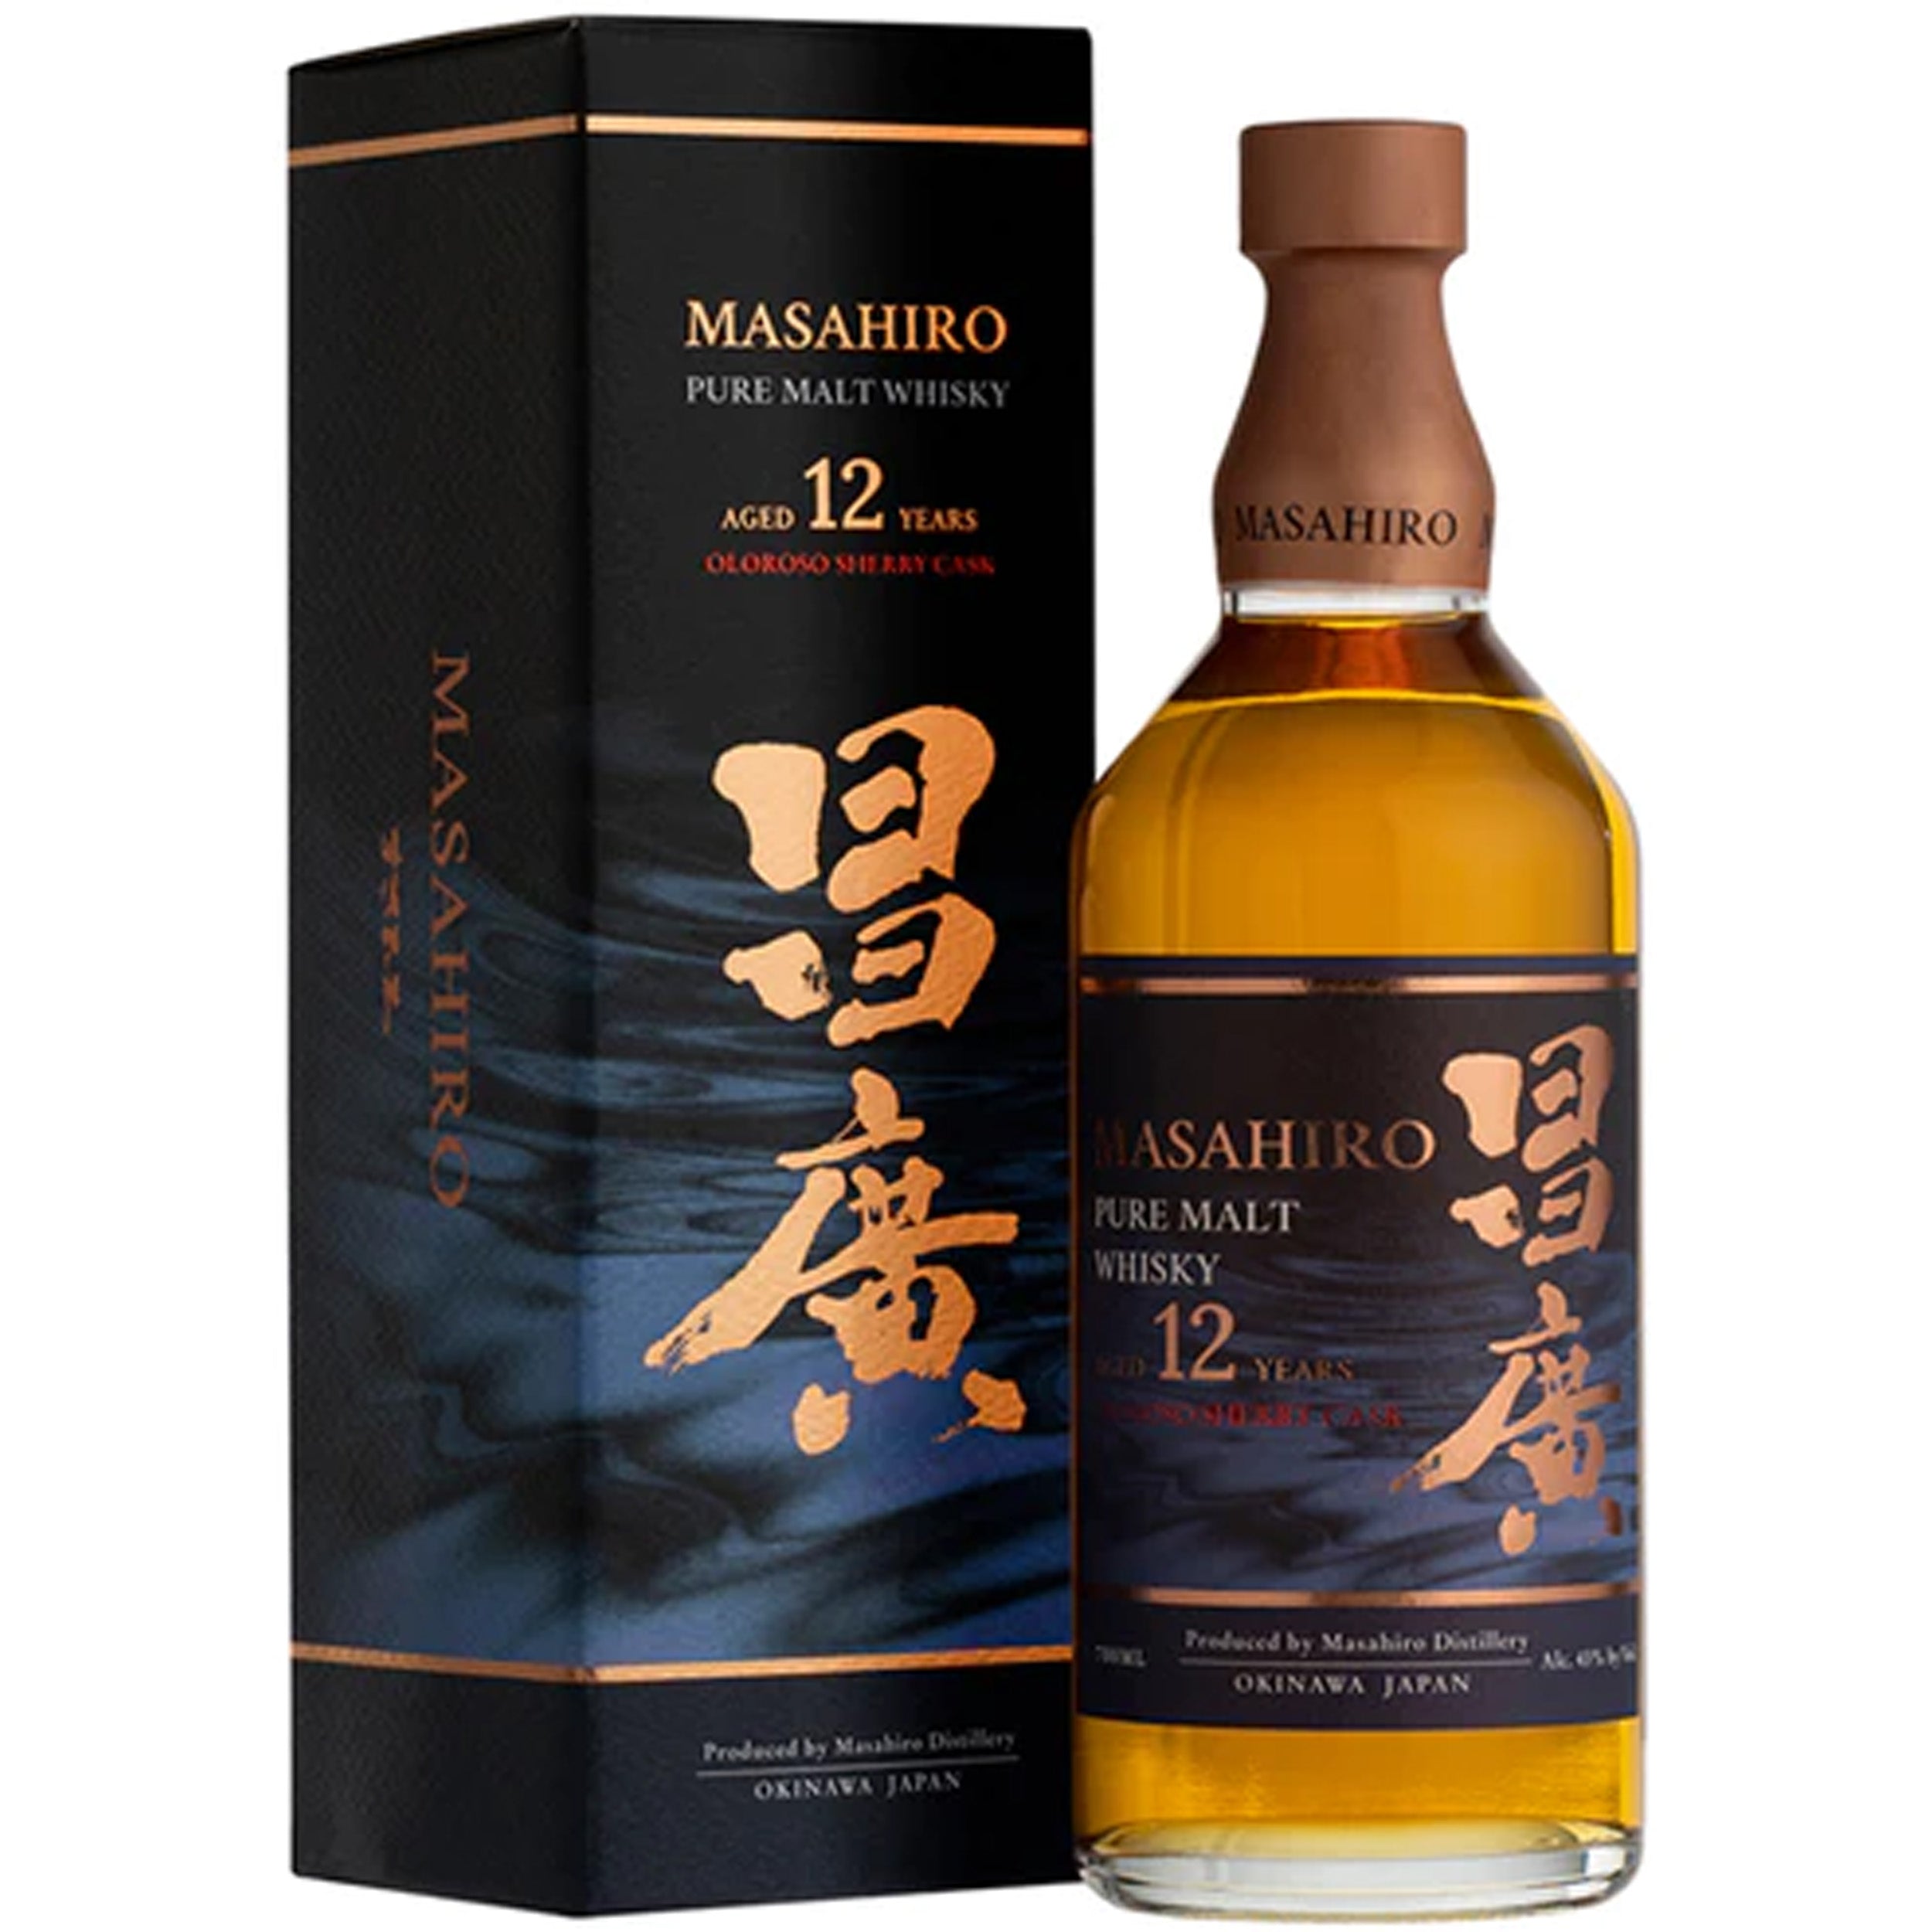 Masahiro 12 Year Old Oloroso Sherry Cask Finish Pure Malt Whisky